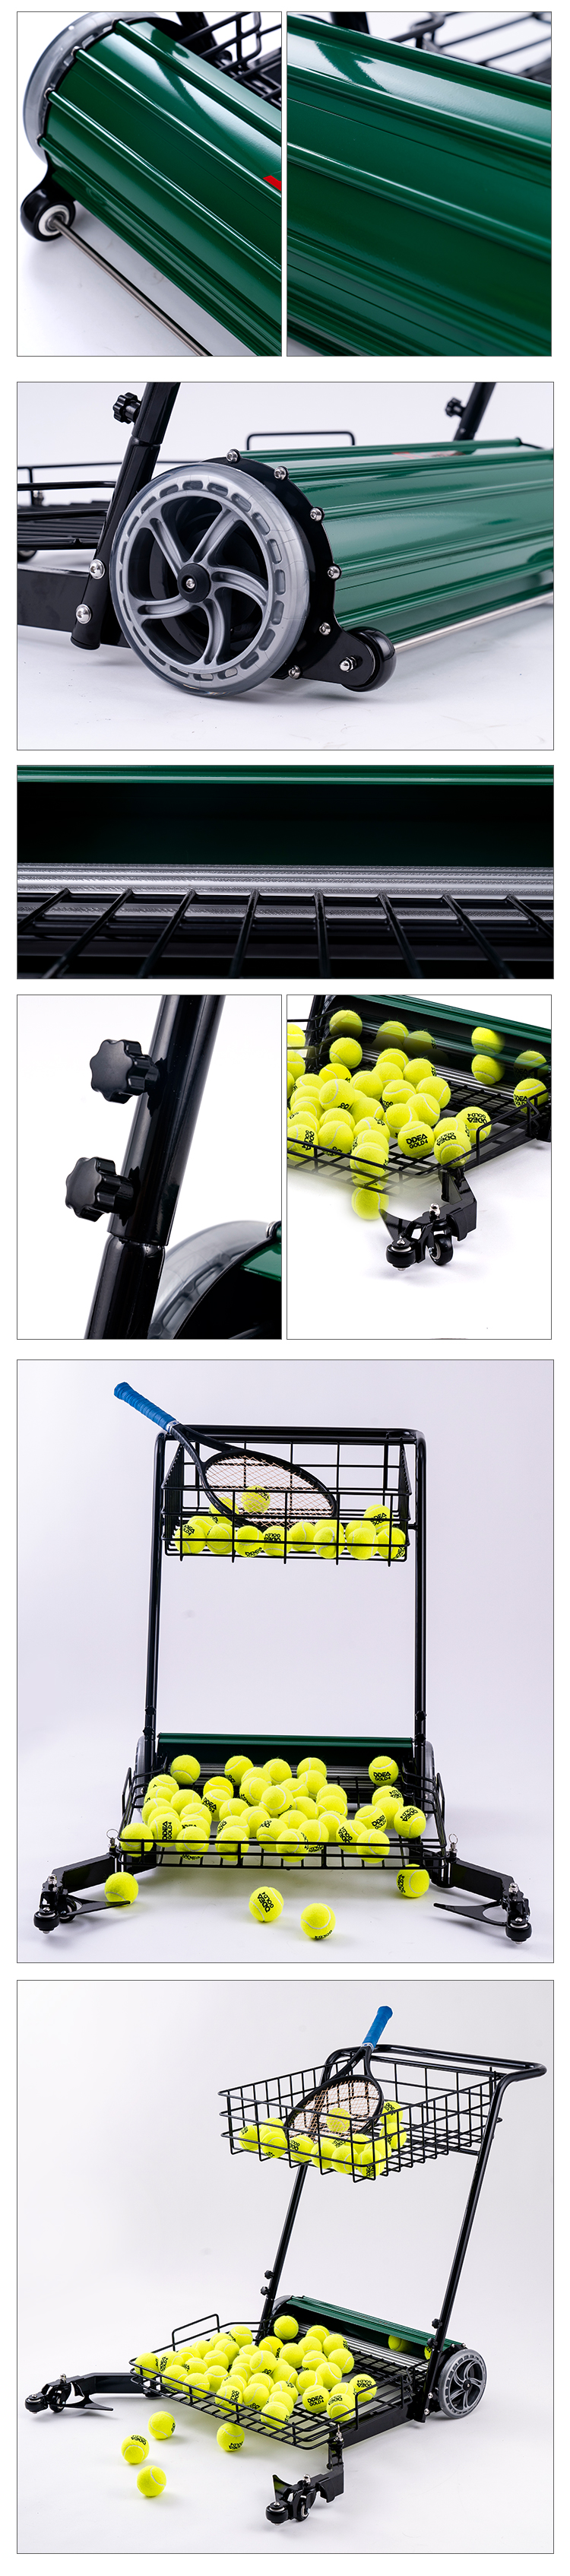 tennis collect machine (7)